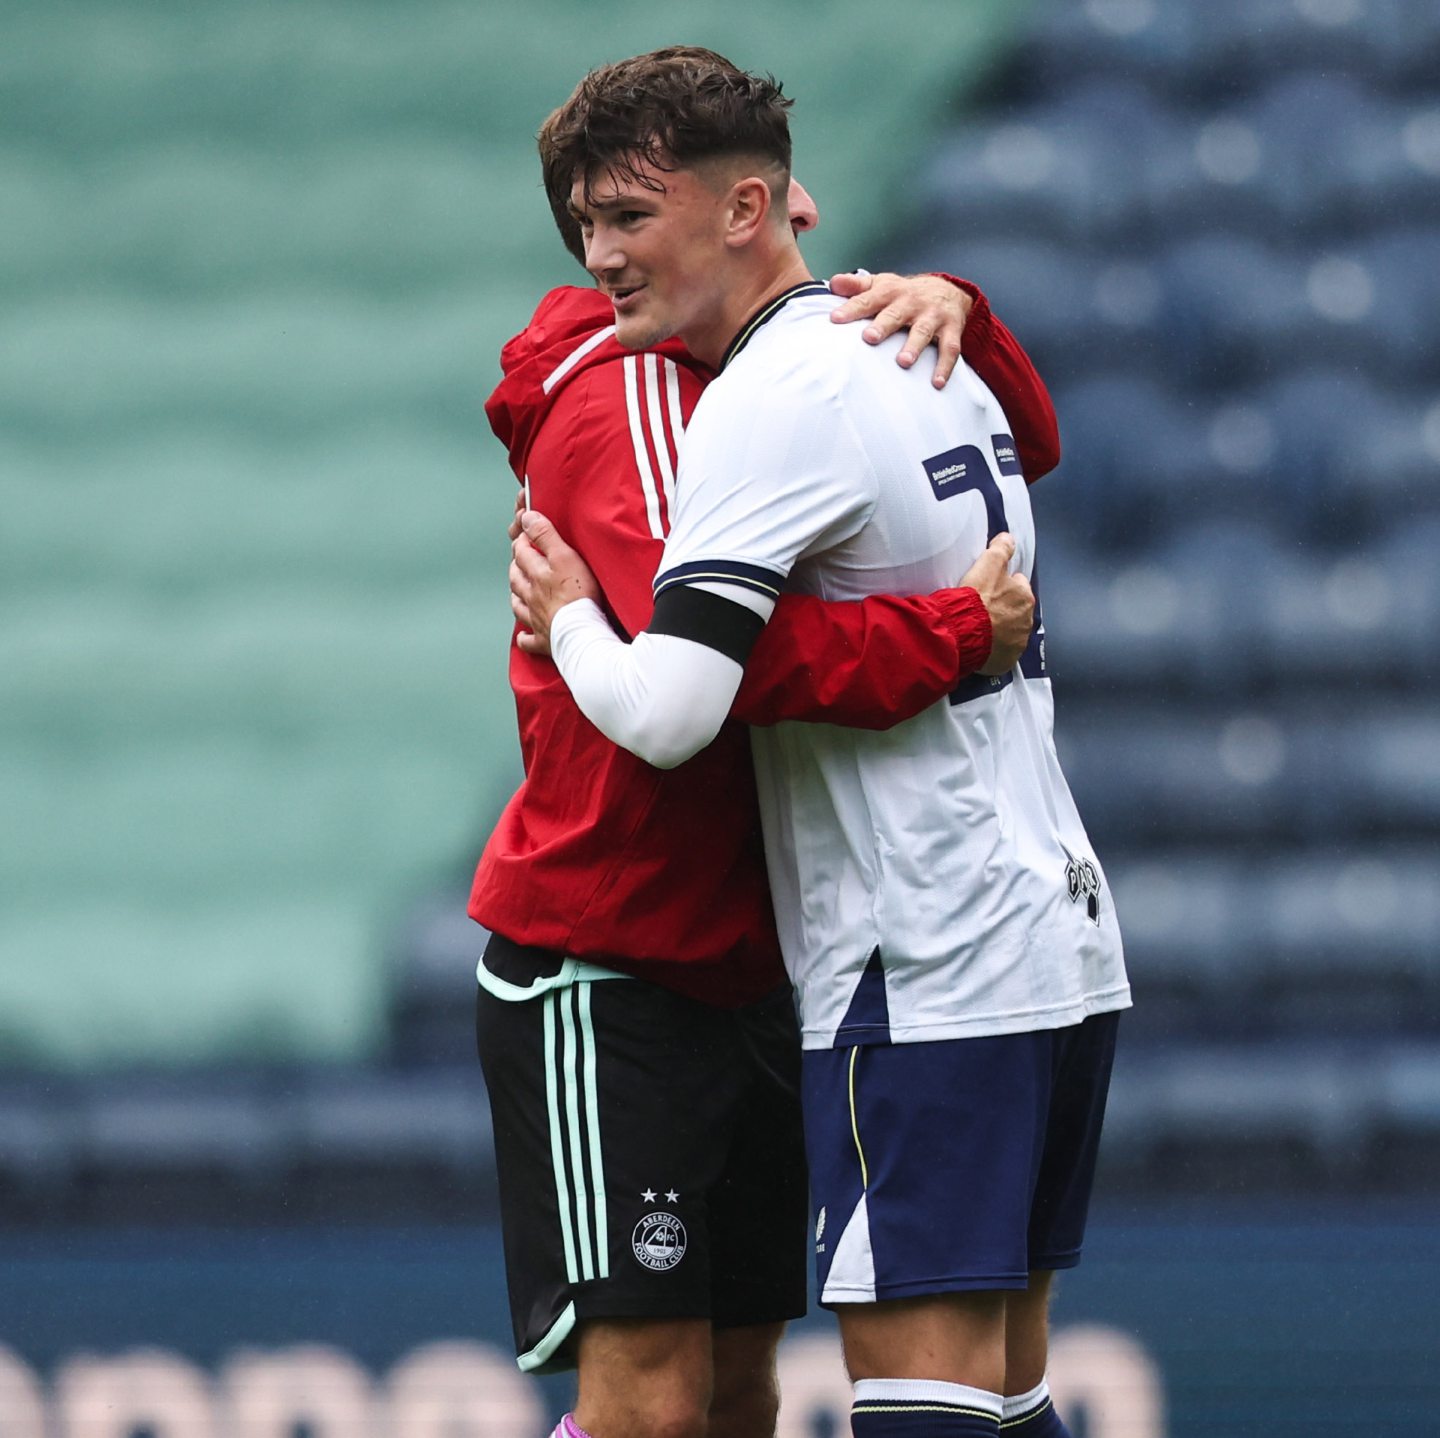 Aberdeen's Graeme Shinnie and Preston's Calvin Ramsay hugging after a friendly